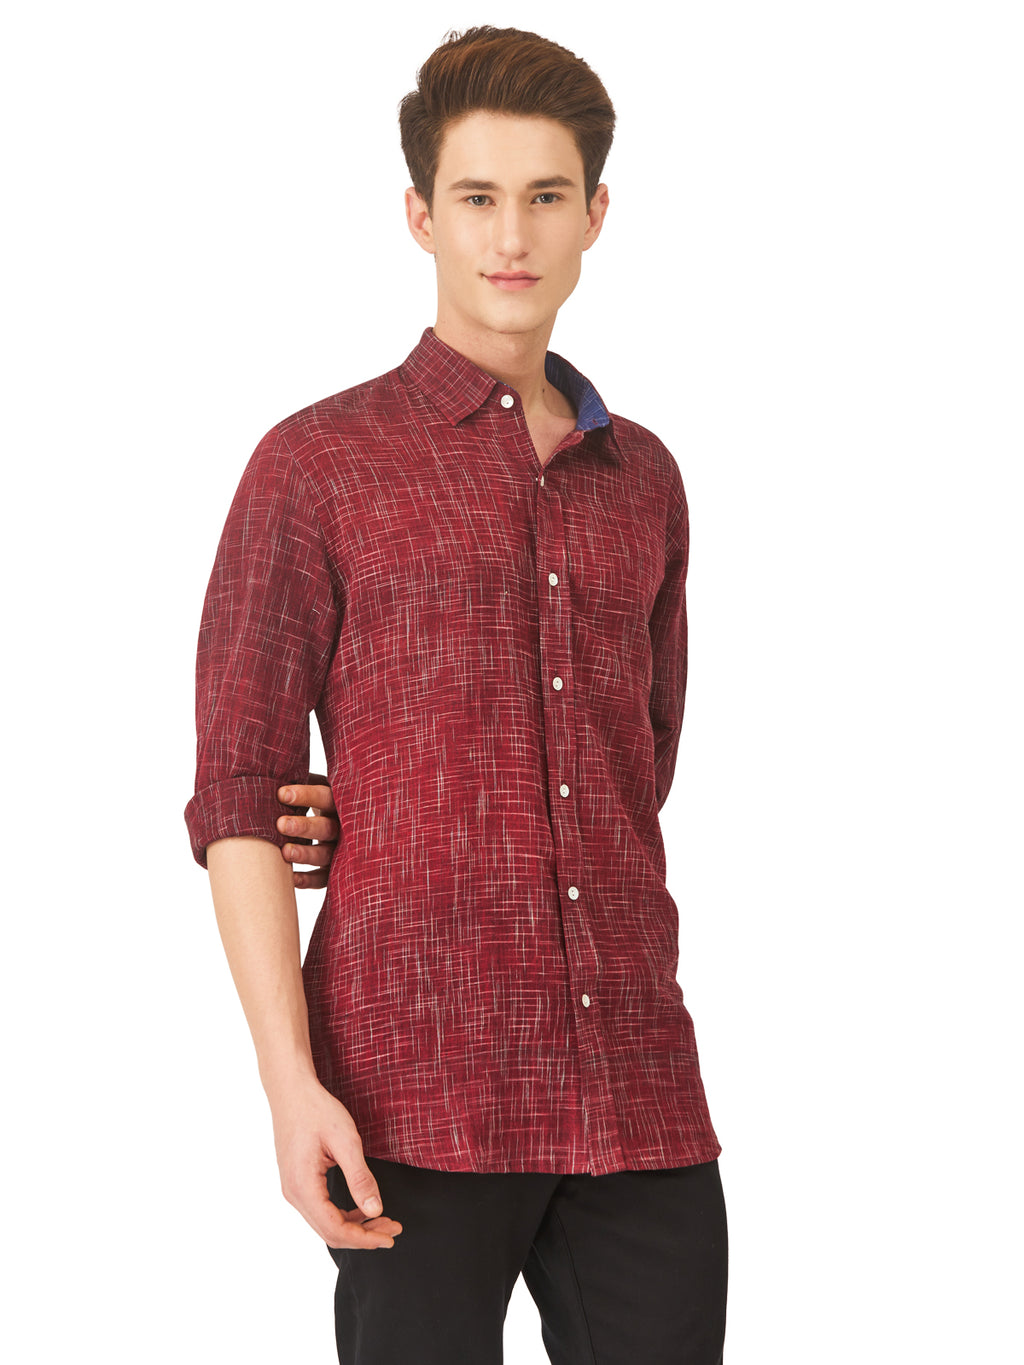 Textured Soft Handloom Deep Maroon Shirt With Mix N Match Combination